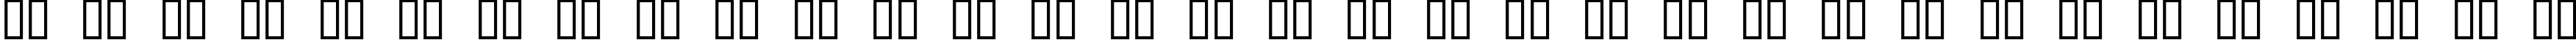 Пример написания русского алфавита шрифтом Philtered Phont